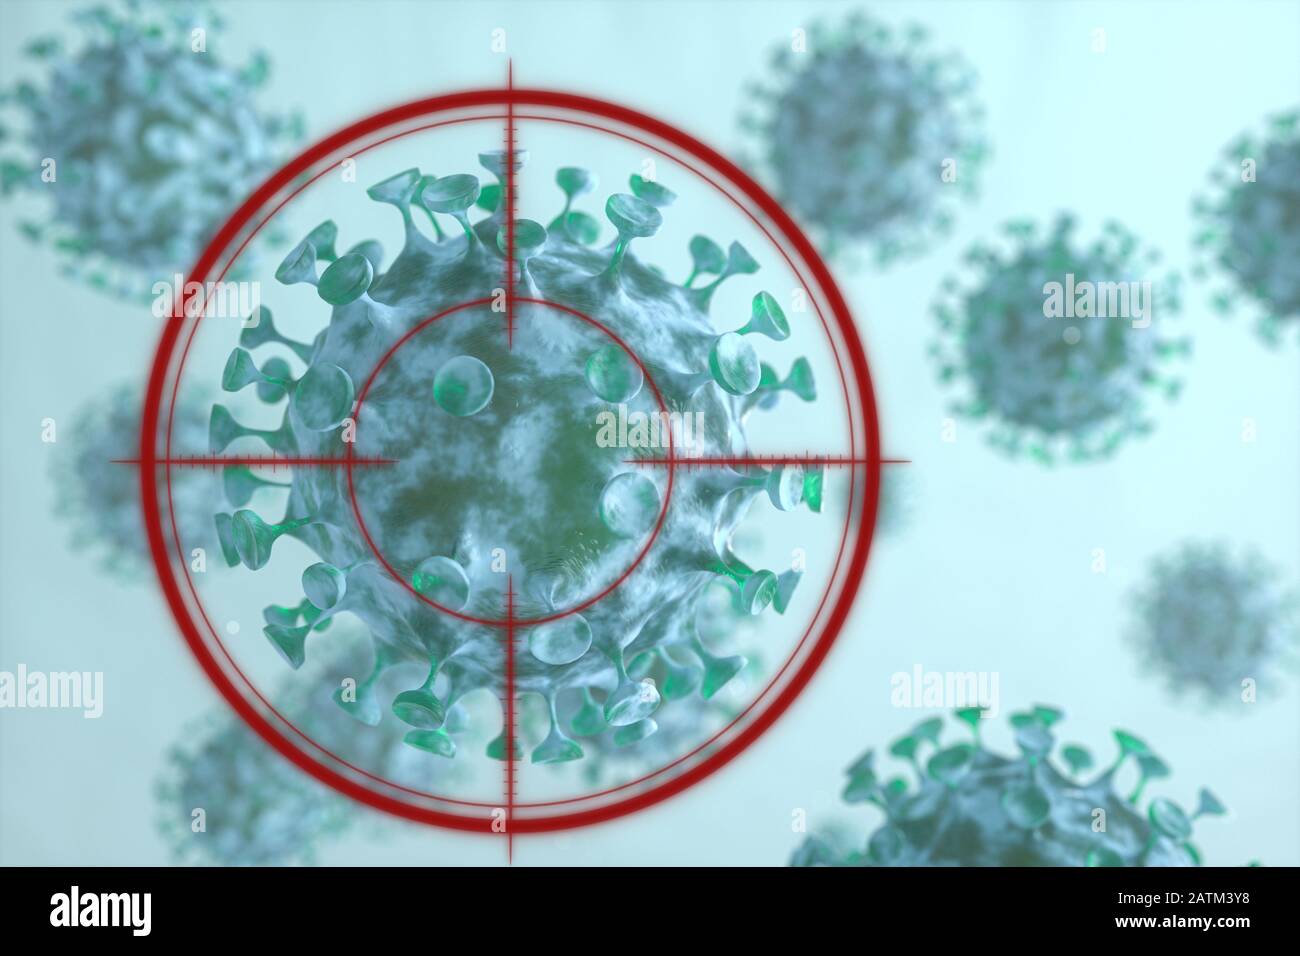 Dispersed corona viruses with aiming target, 3d rendering. Computer digital drawing Stock Photo